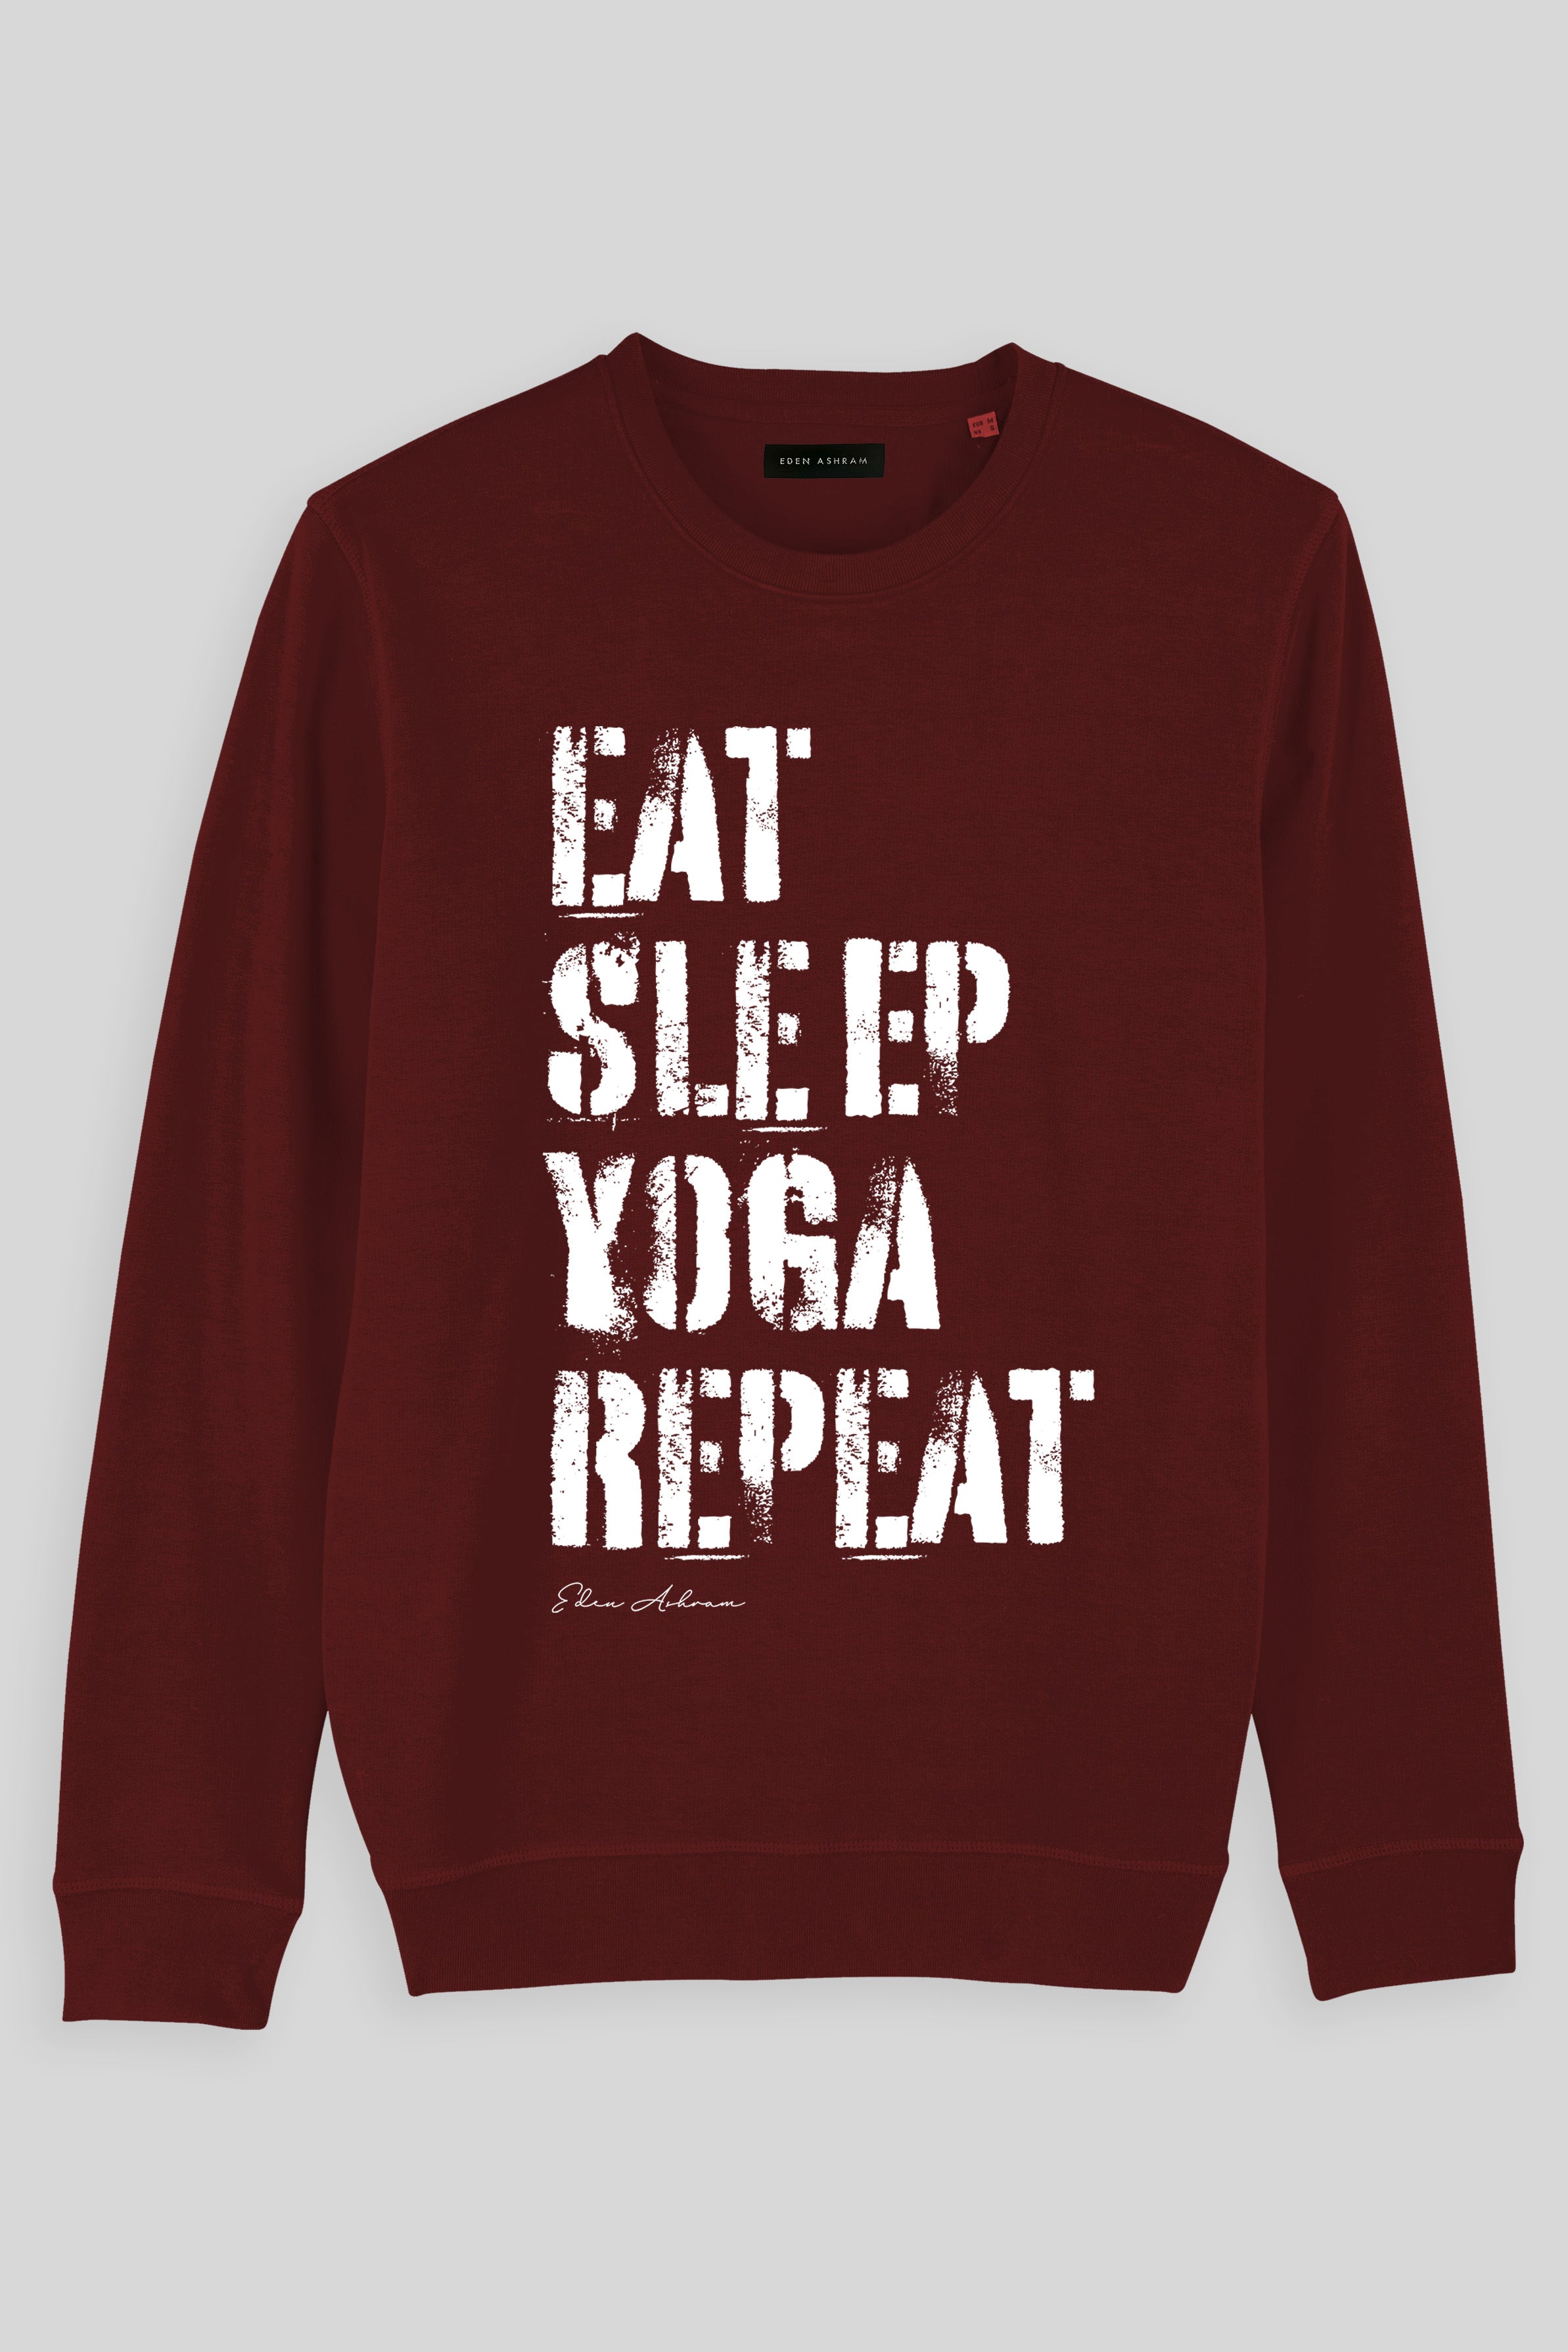 Eden Ashram Eat, Sleep, Yoga Repeat Premium Crew Neck Sweatshirt Burgundy